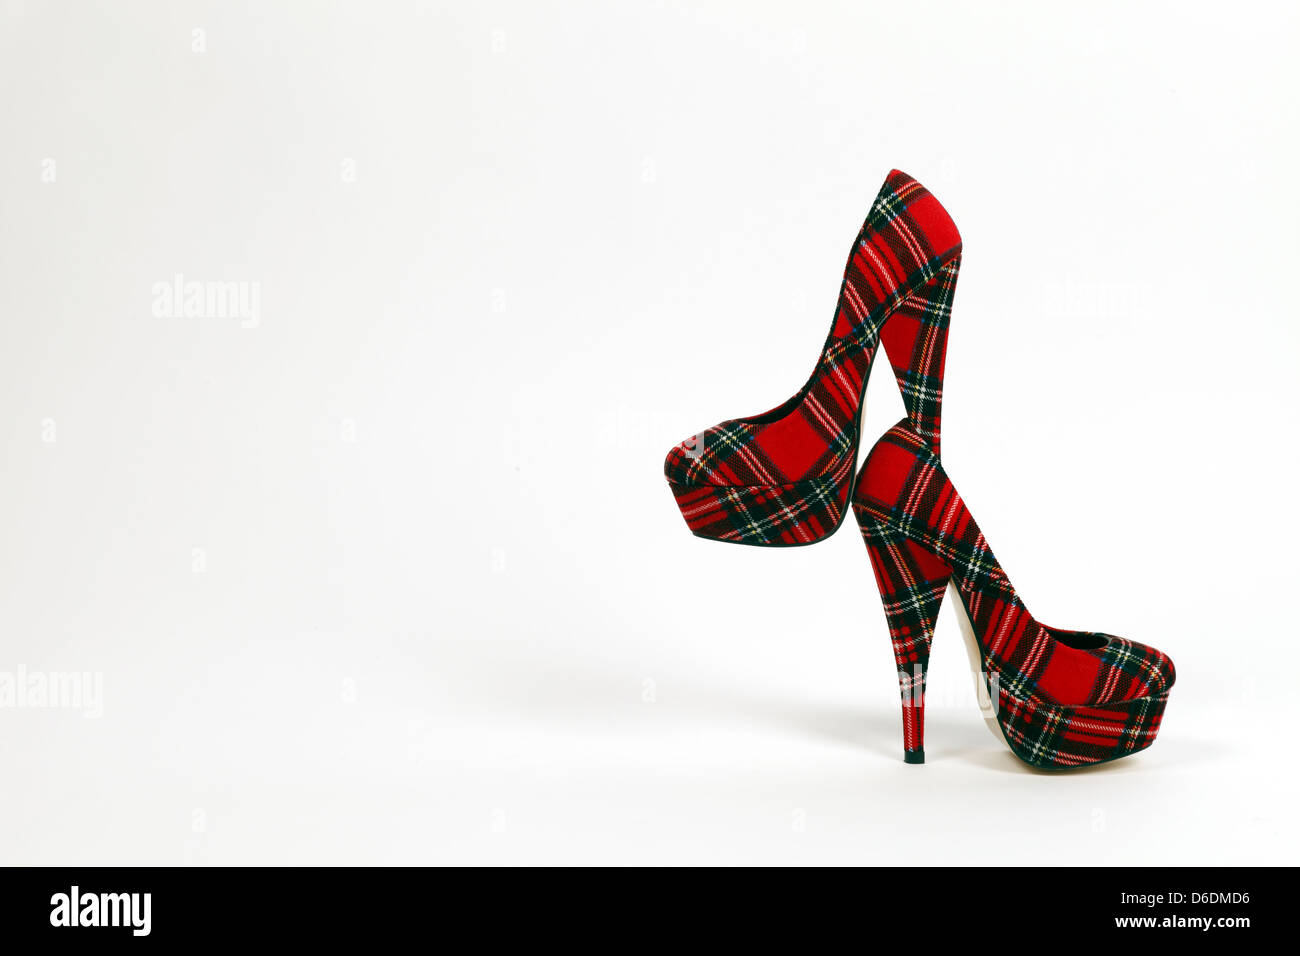 woman very high heels in Tartan cloth Stock Photo